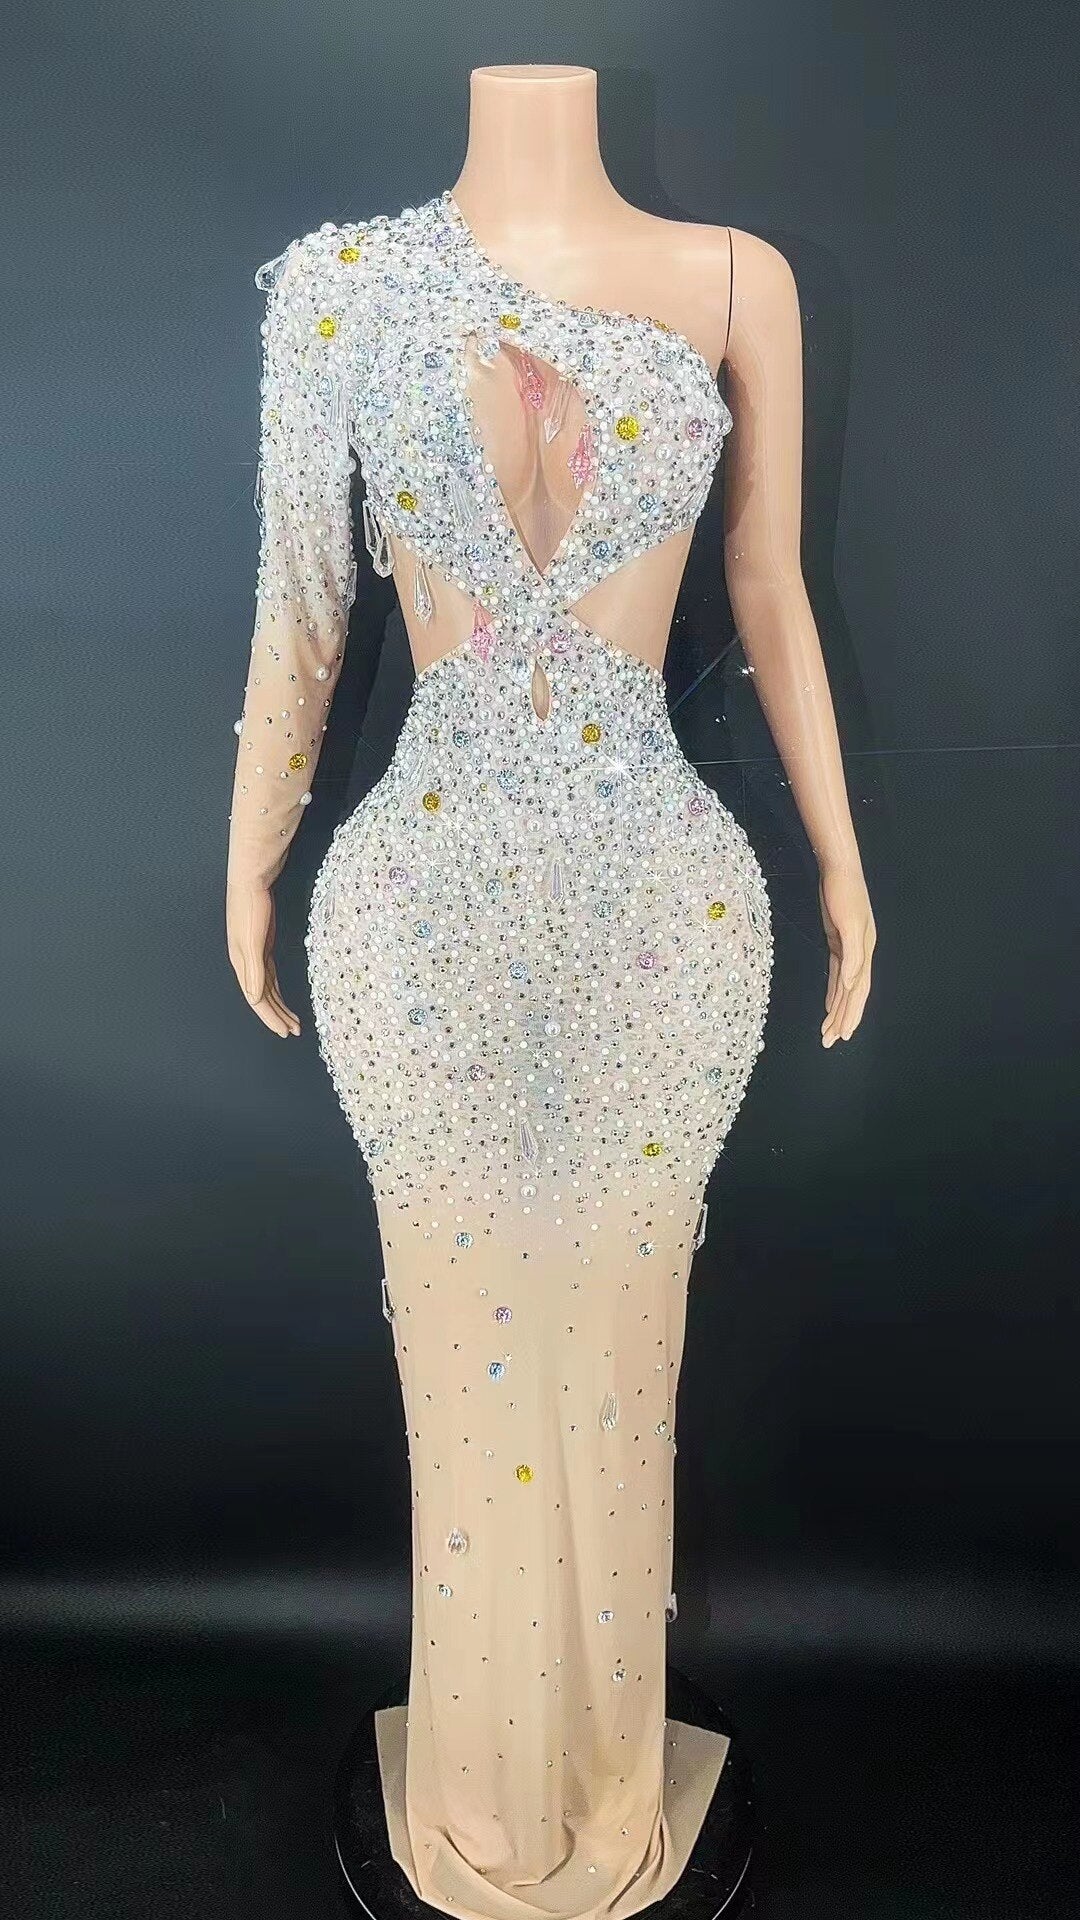 Sexy Sparkly Rhinestones Colorful Dress Mesh Transparent Photoshoot S